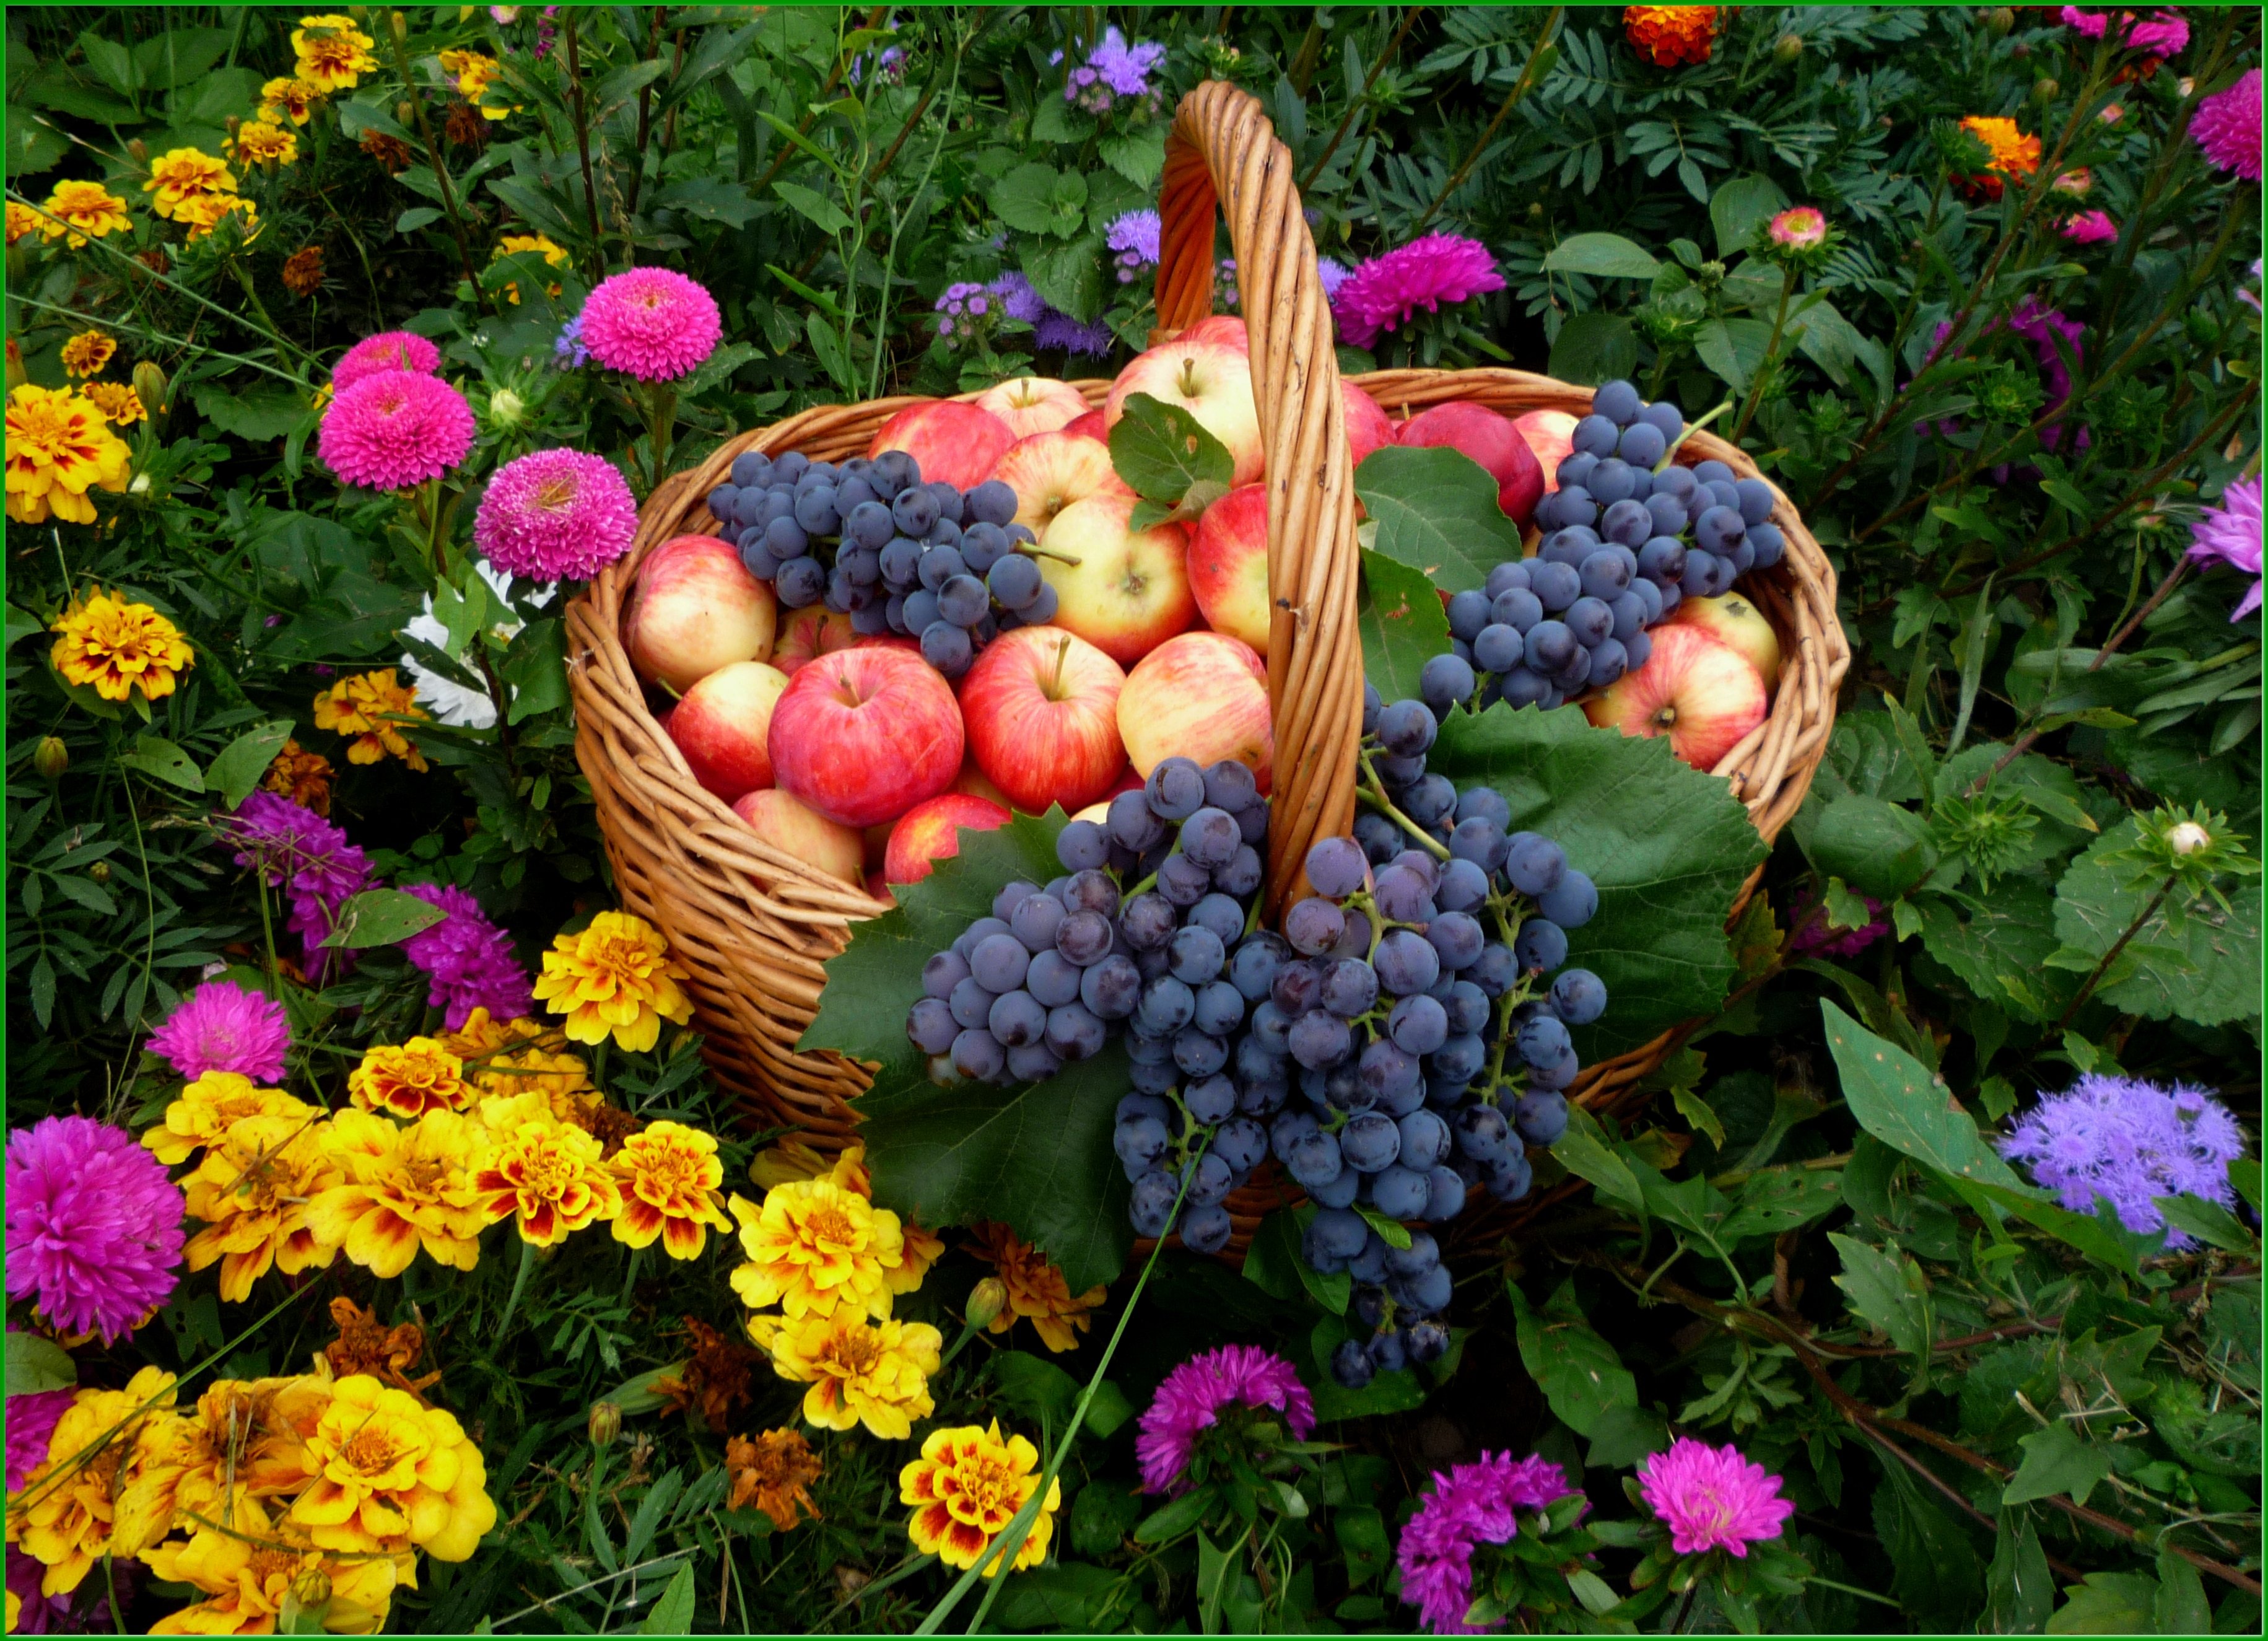 Август конец месяца. Осенние дары природы. Летние фрукты. Сад с фруктами. Красивый август.